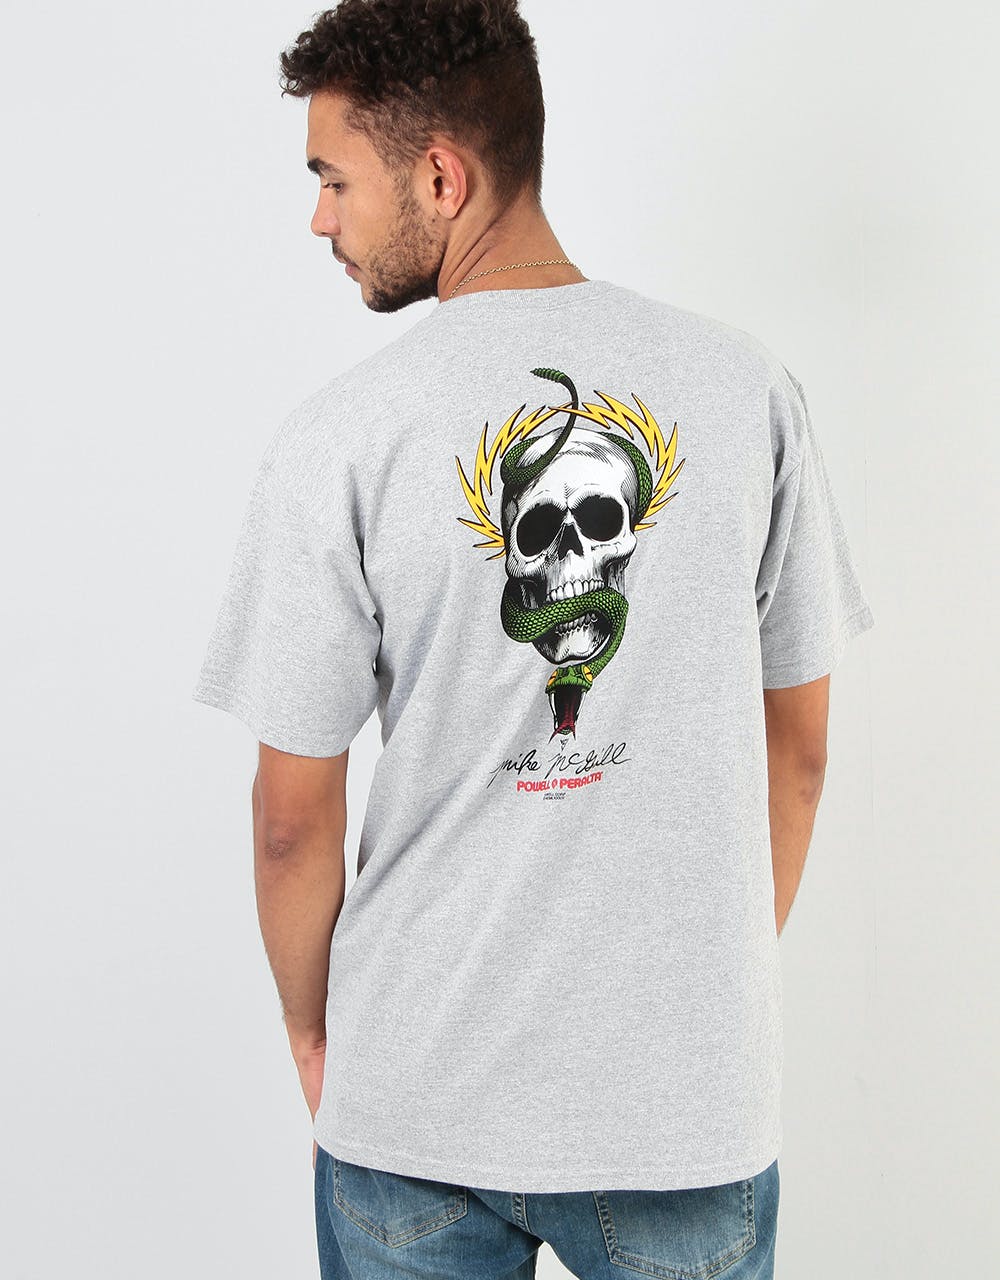 Powell Peralta Skull & Snake T-Shirt - Heather Grey